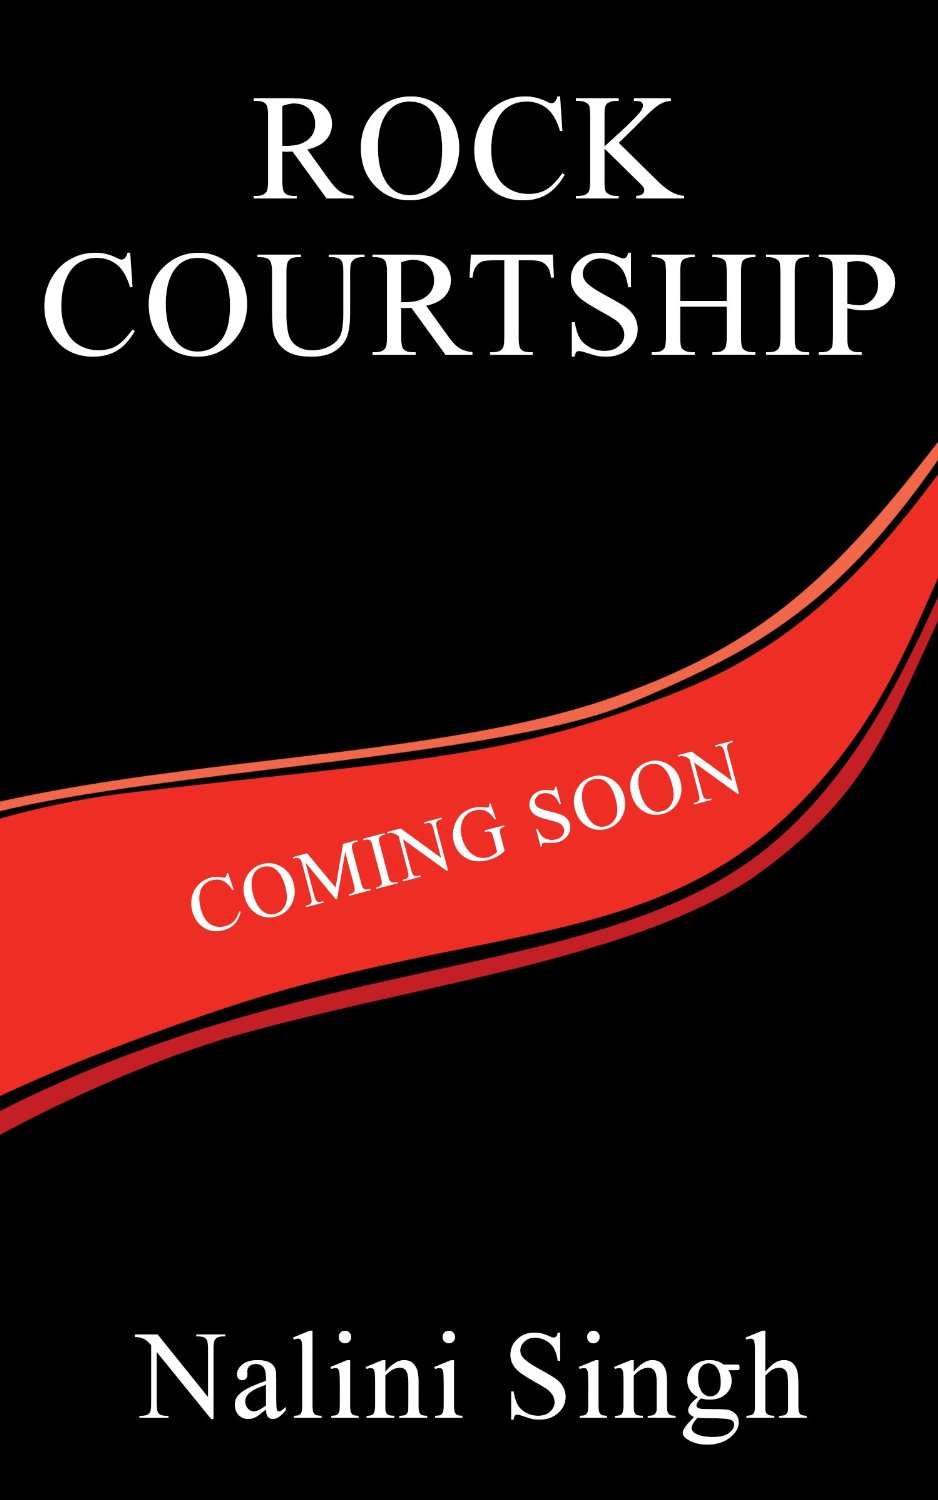 rock courtshop coming soon.jpg